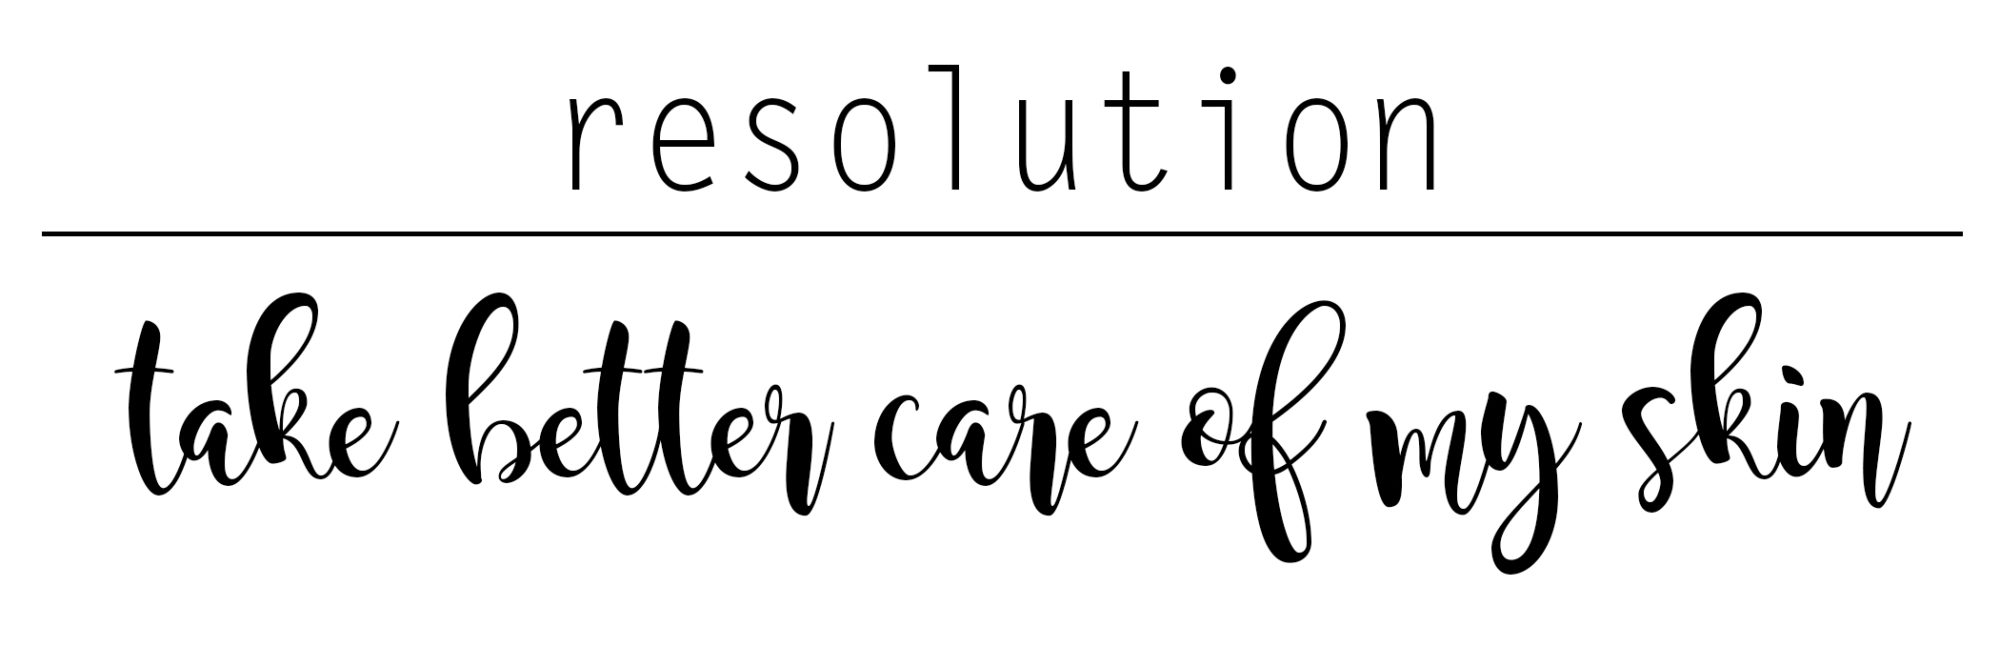 My 2018 Resolutions